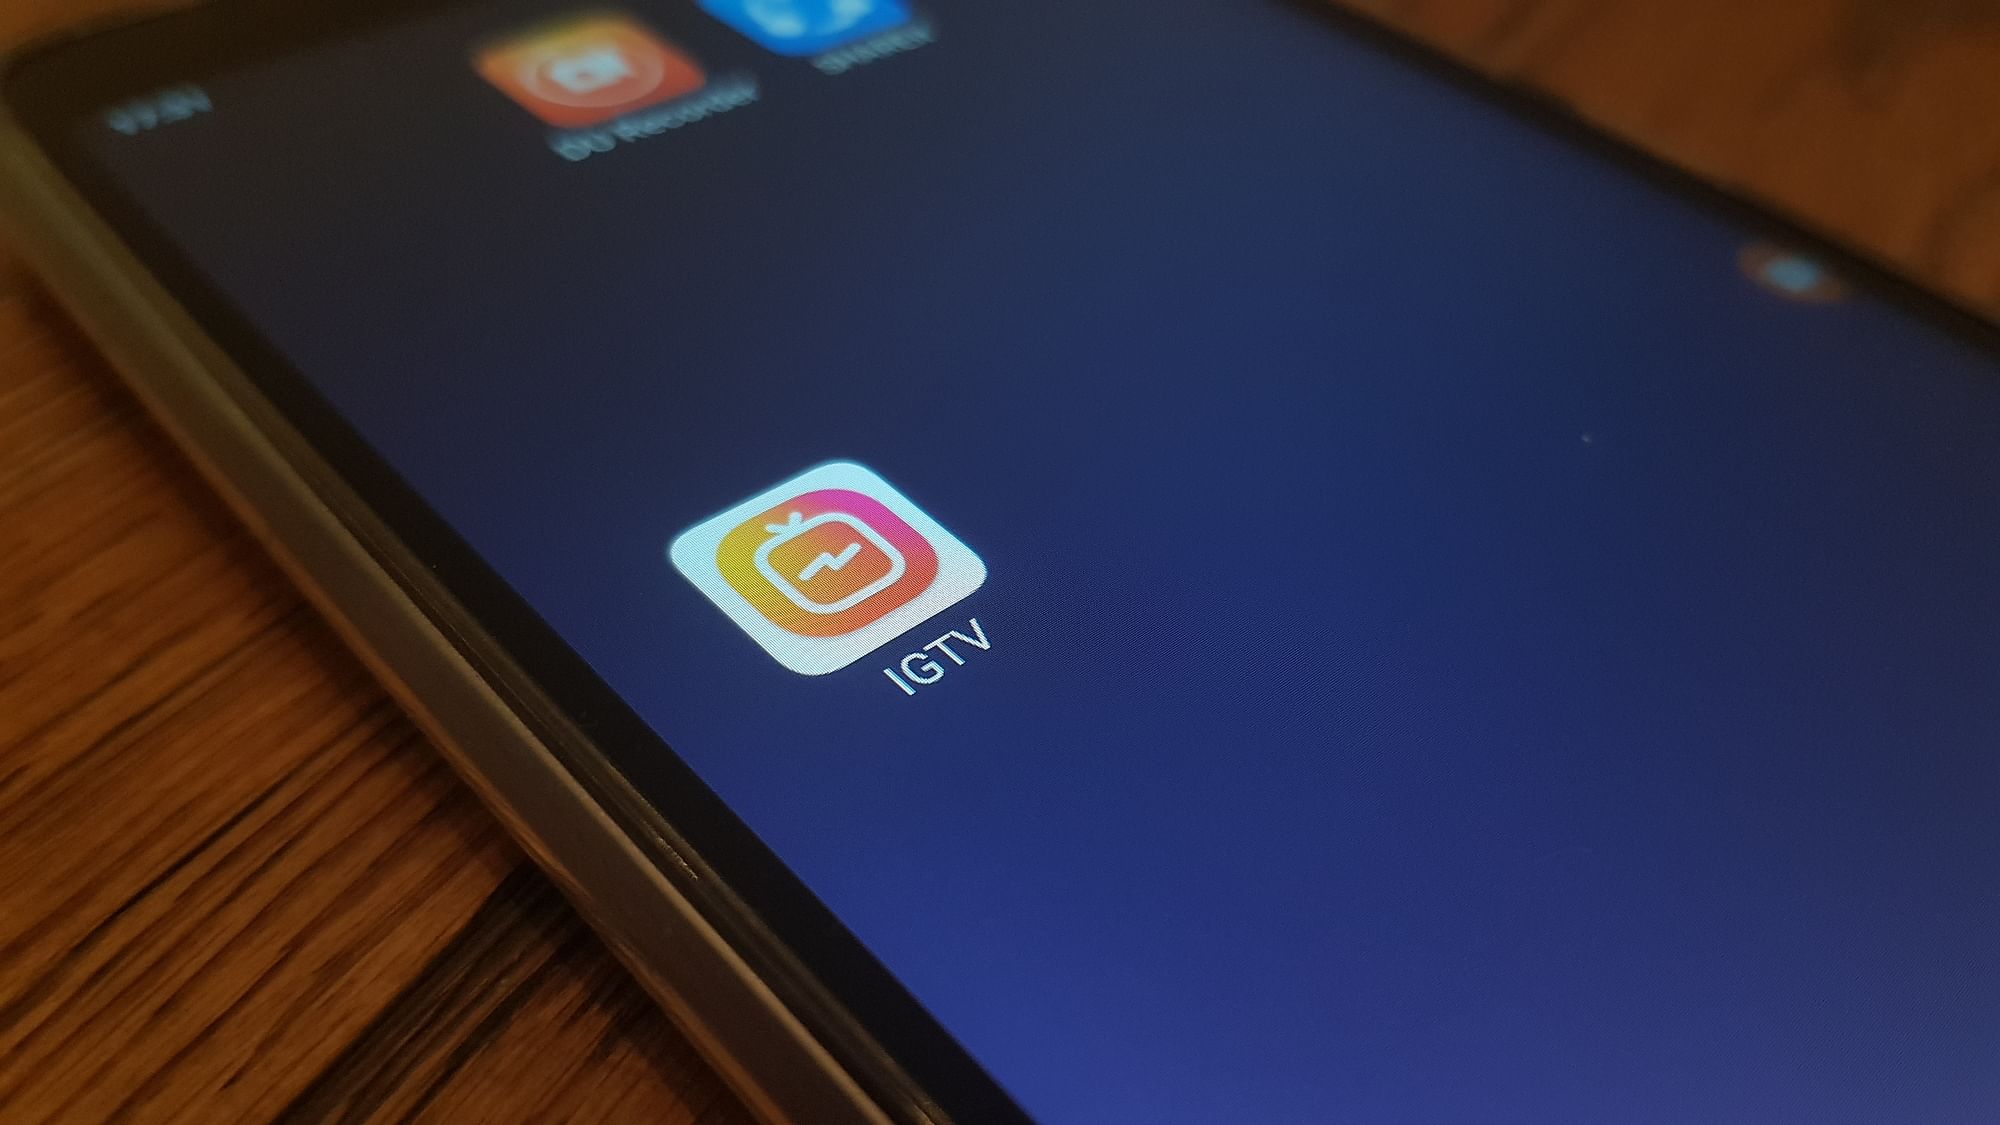  IGTV is Instagram’s long-format video app.